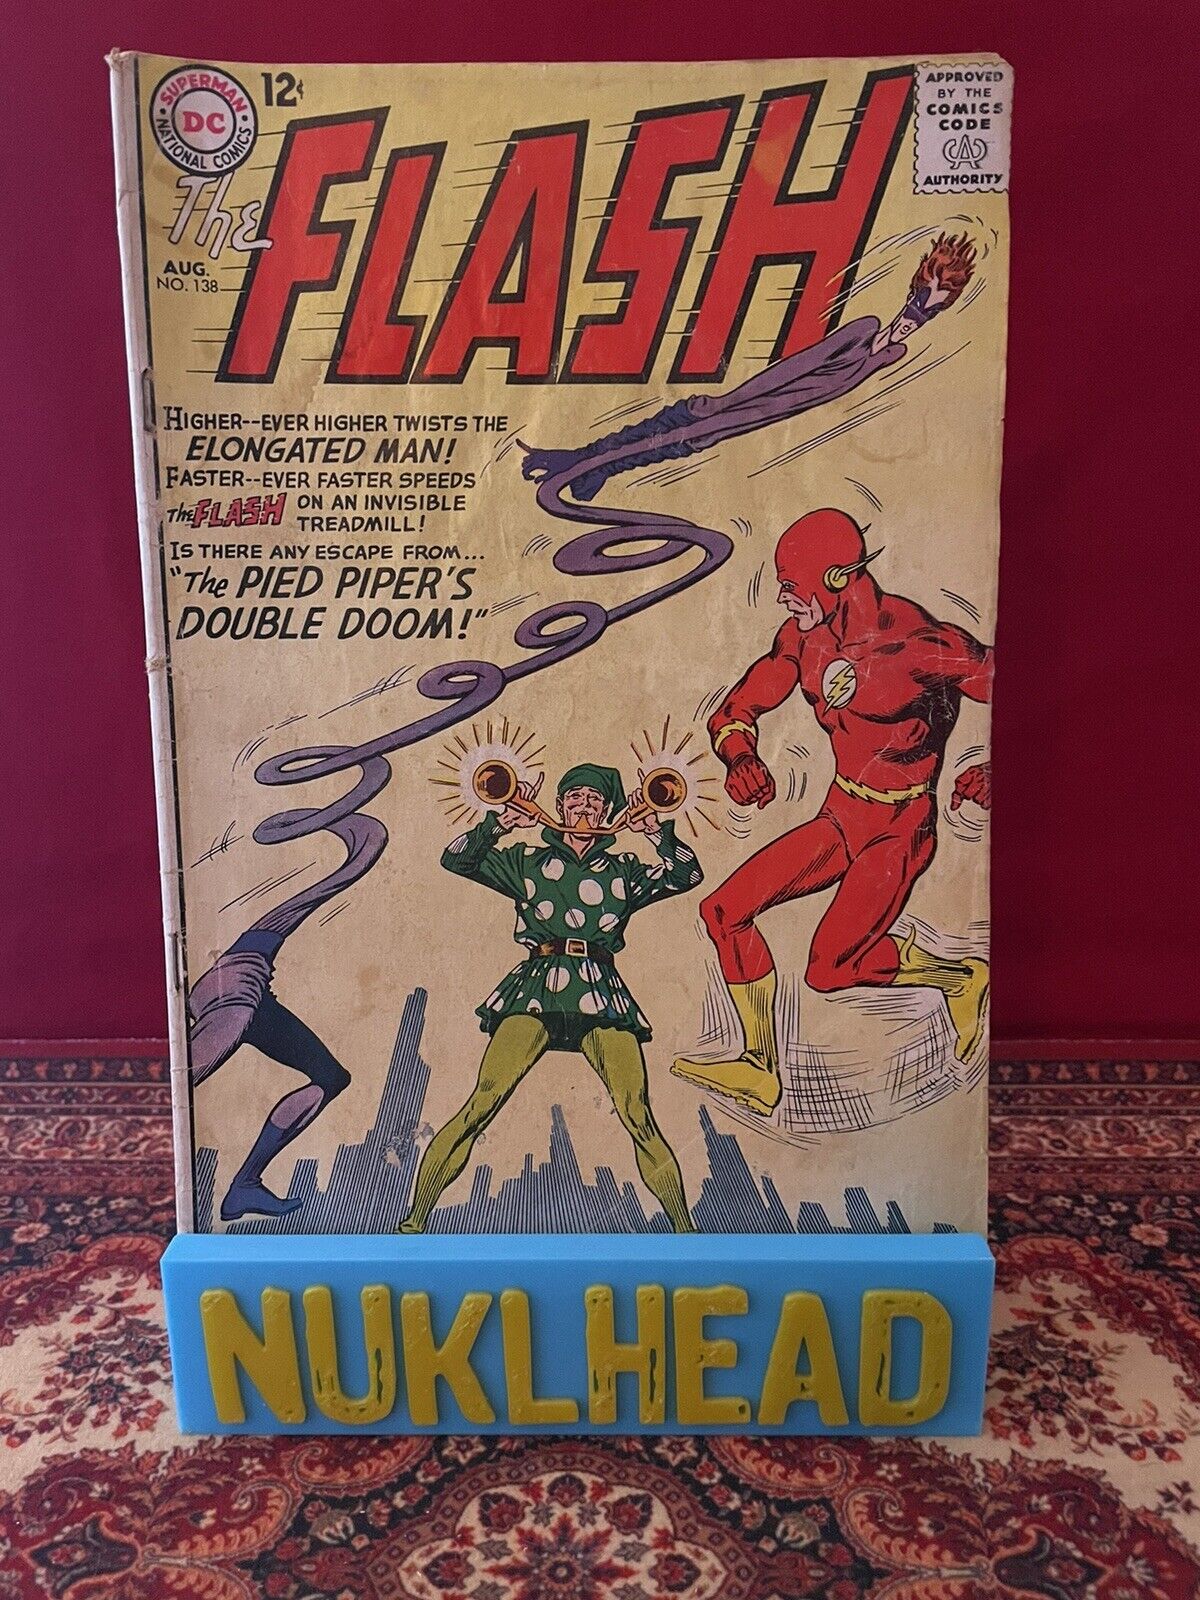 THE FLASH #138 DC Comics 1963 1st App. of DEXTER MYLES